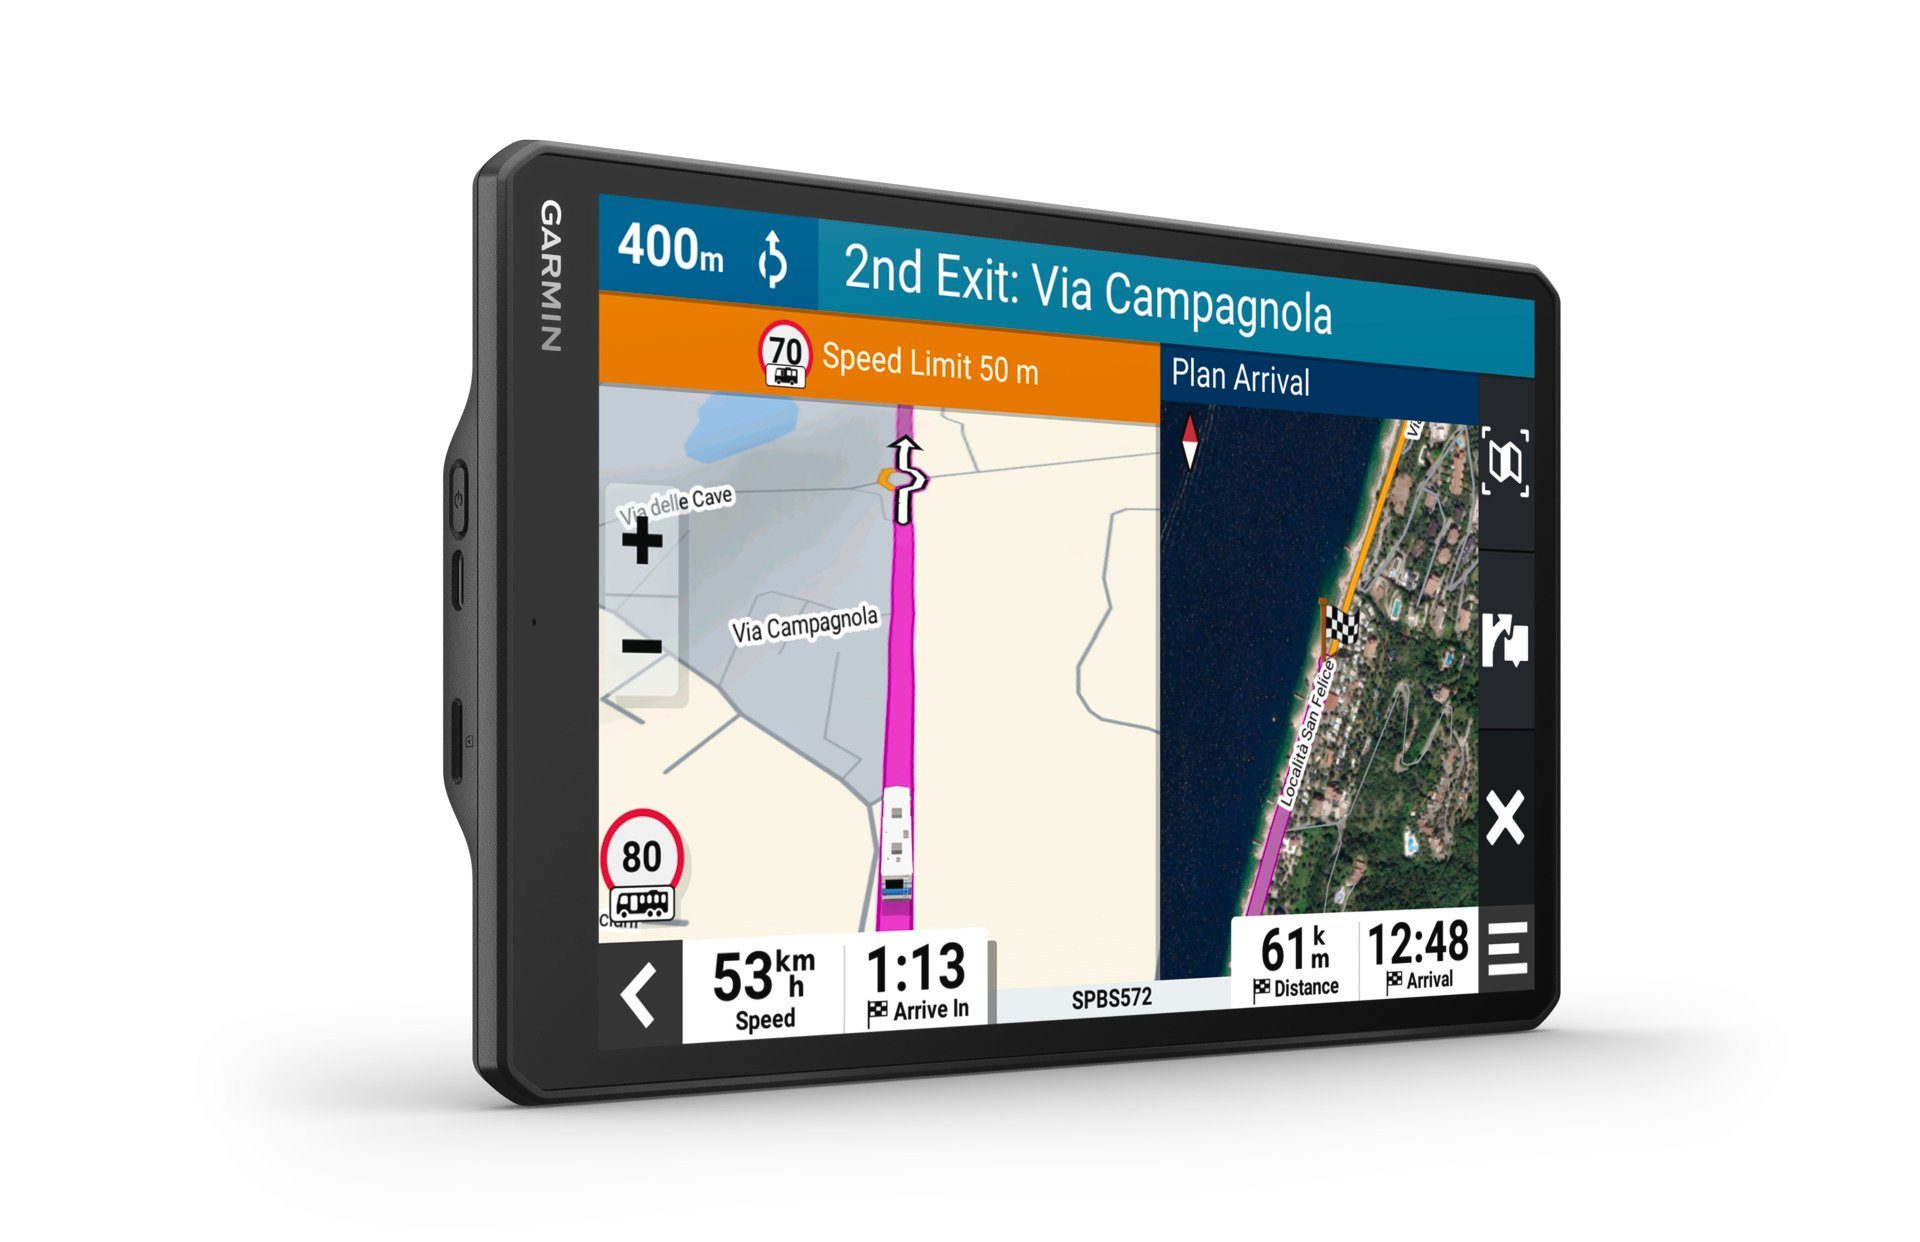 EU, (Europa 1095, Navigationsgerät Karten-Updates, Bluetooth) Camper GPS Länder), (45 Garmin